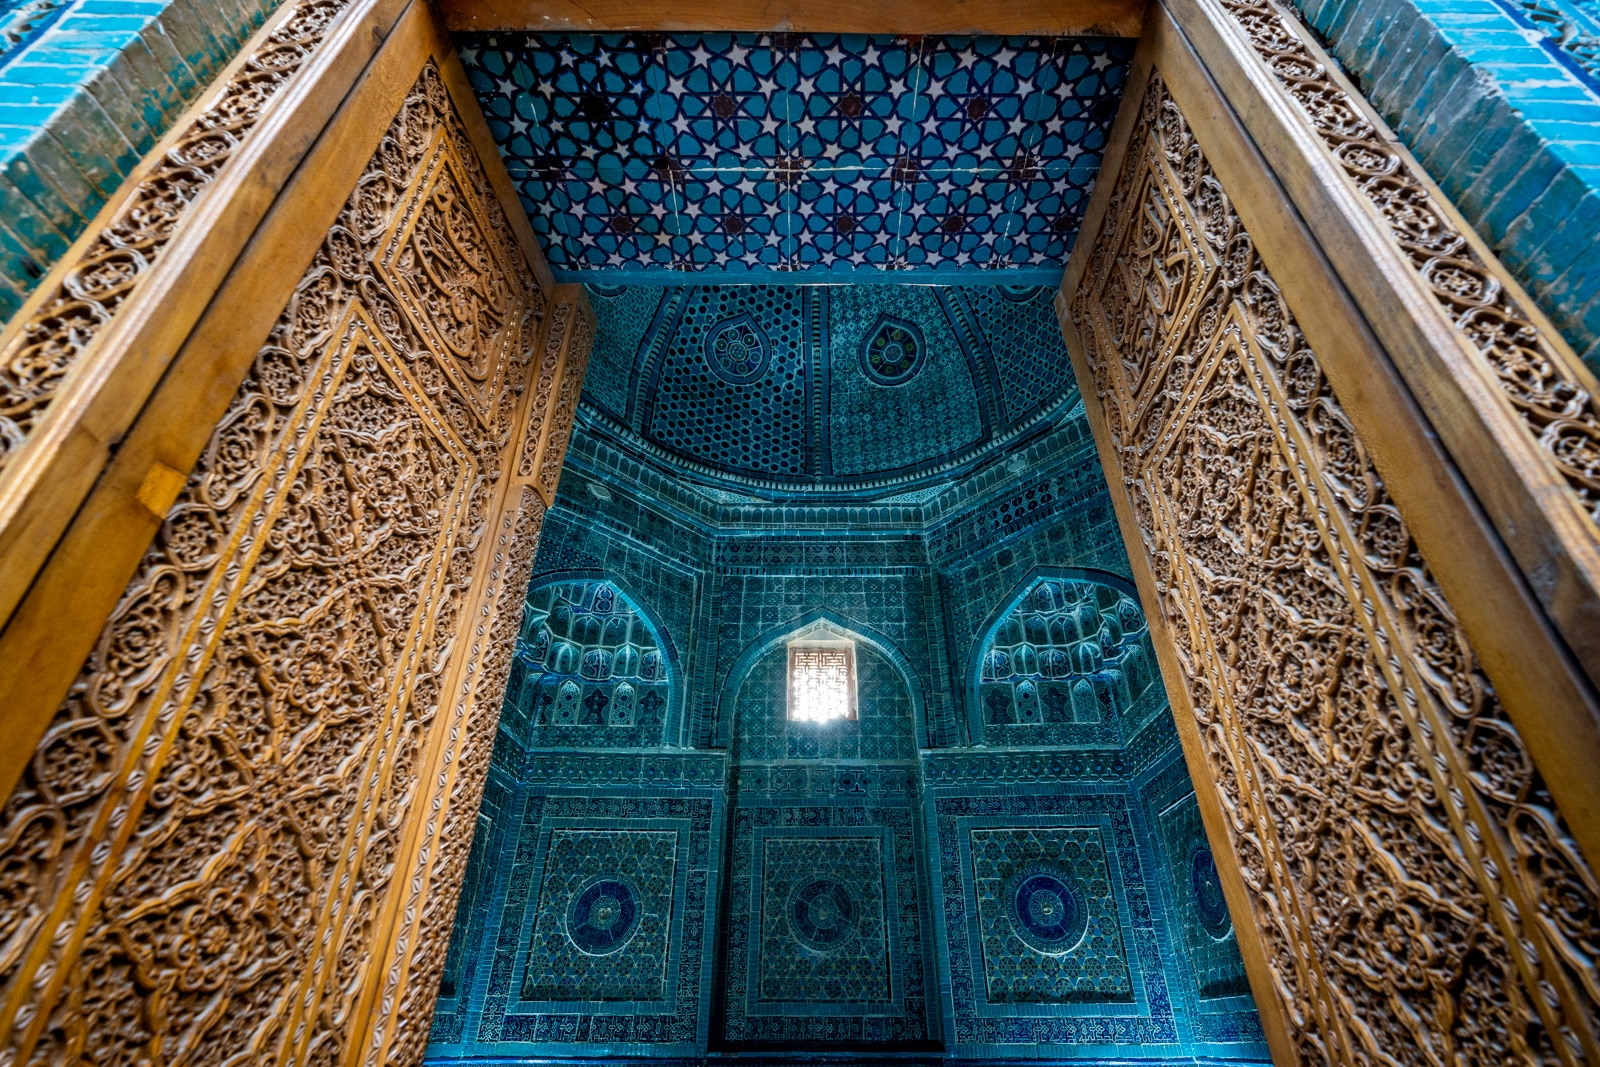 Doorway into the Shah-i-Zinda necropolis in Samarkand, Uzbekistan